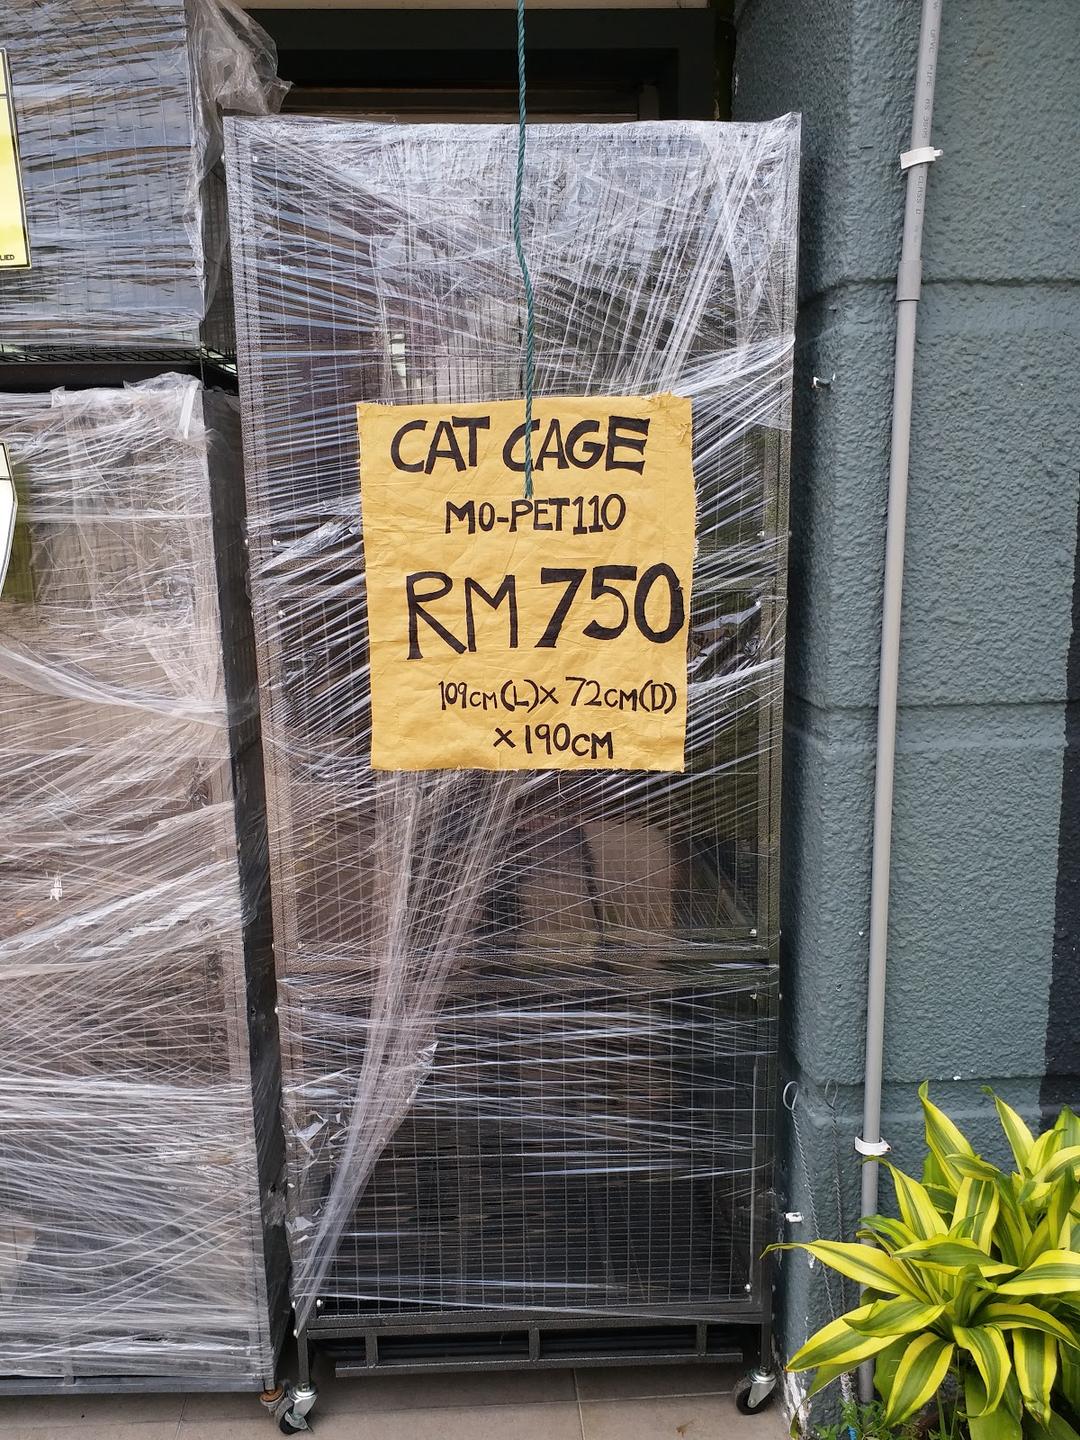 Photo of Pets Direct - Shah Alam - Pemborong Barangan Kucing No 1 - Royal Canin Wholesaler - Shah Alam, Selangor, Malaysia